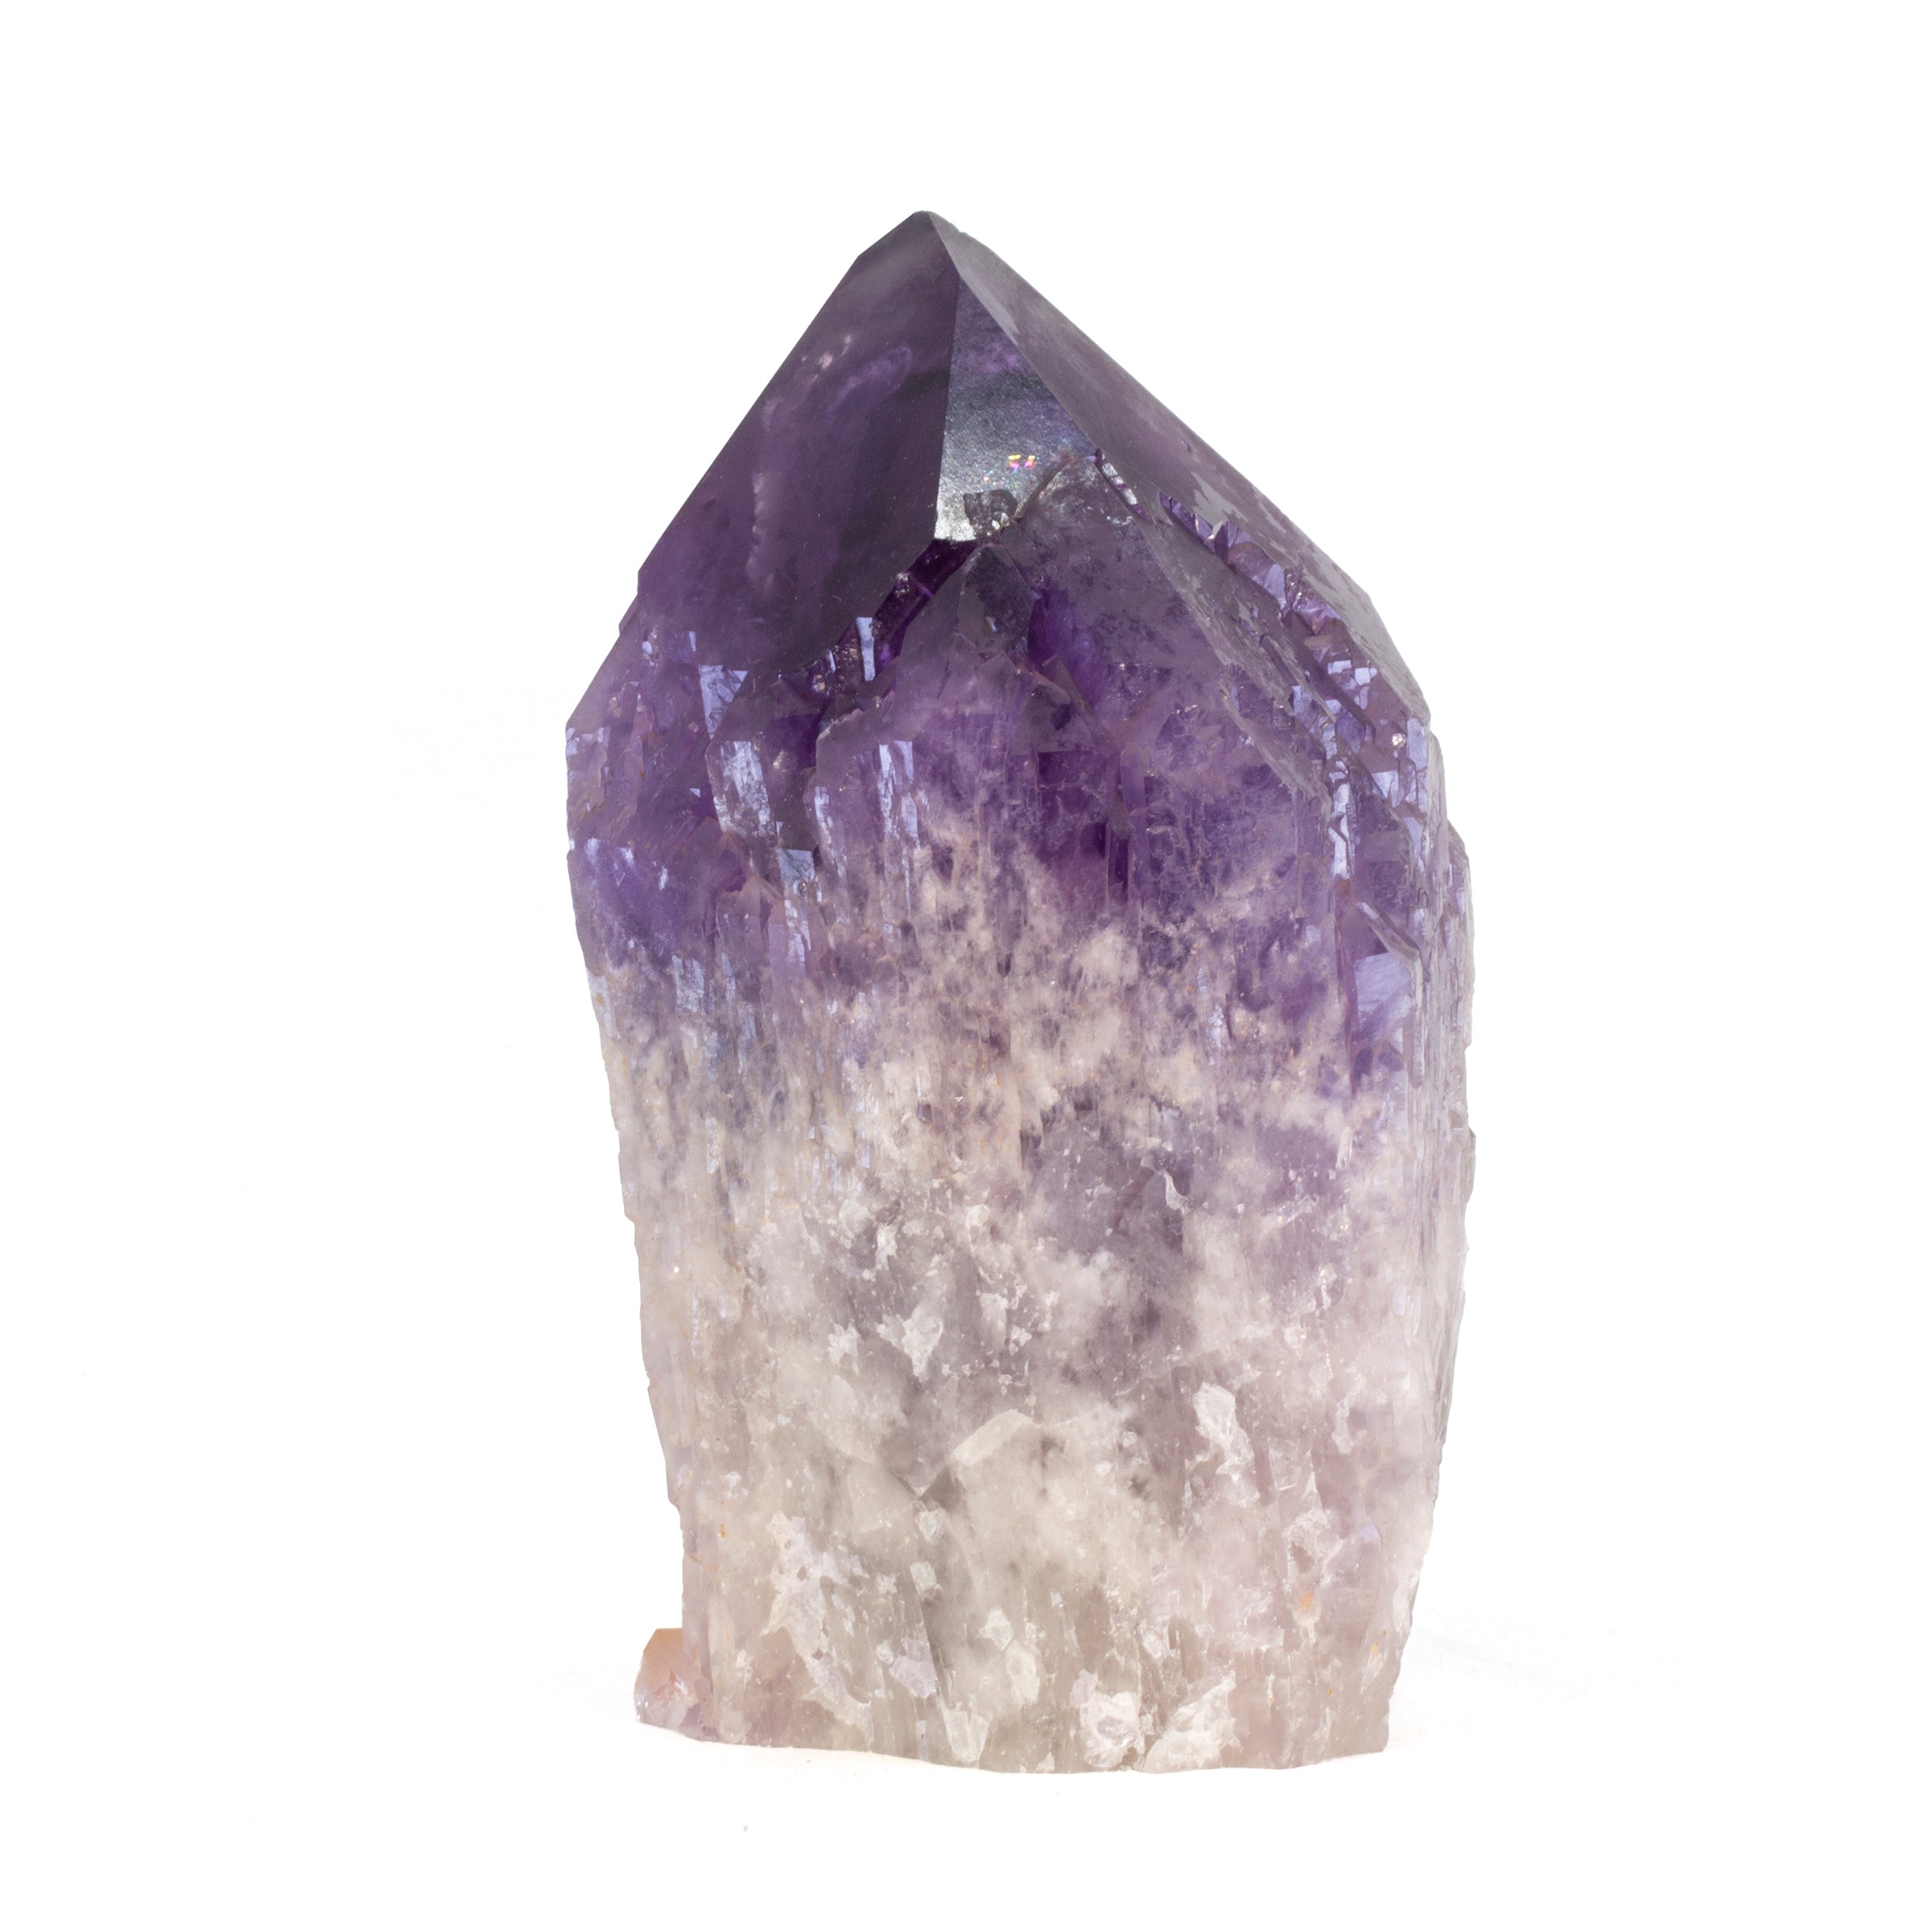 Ametrine 6.75 Inch 4.35lb Natural Crystal - Bolivia - JJX-429 - Crystalarium